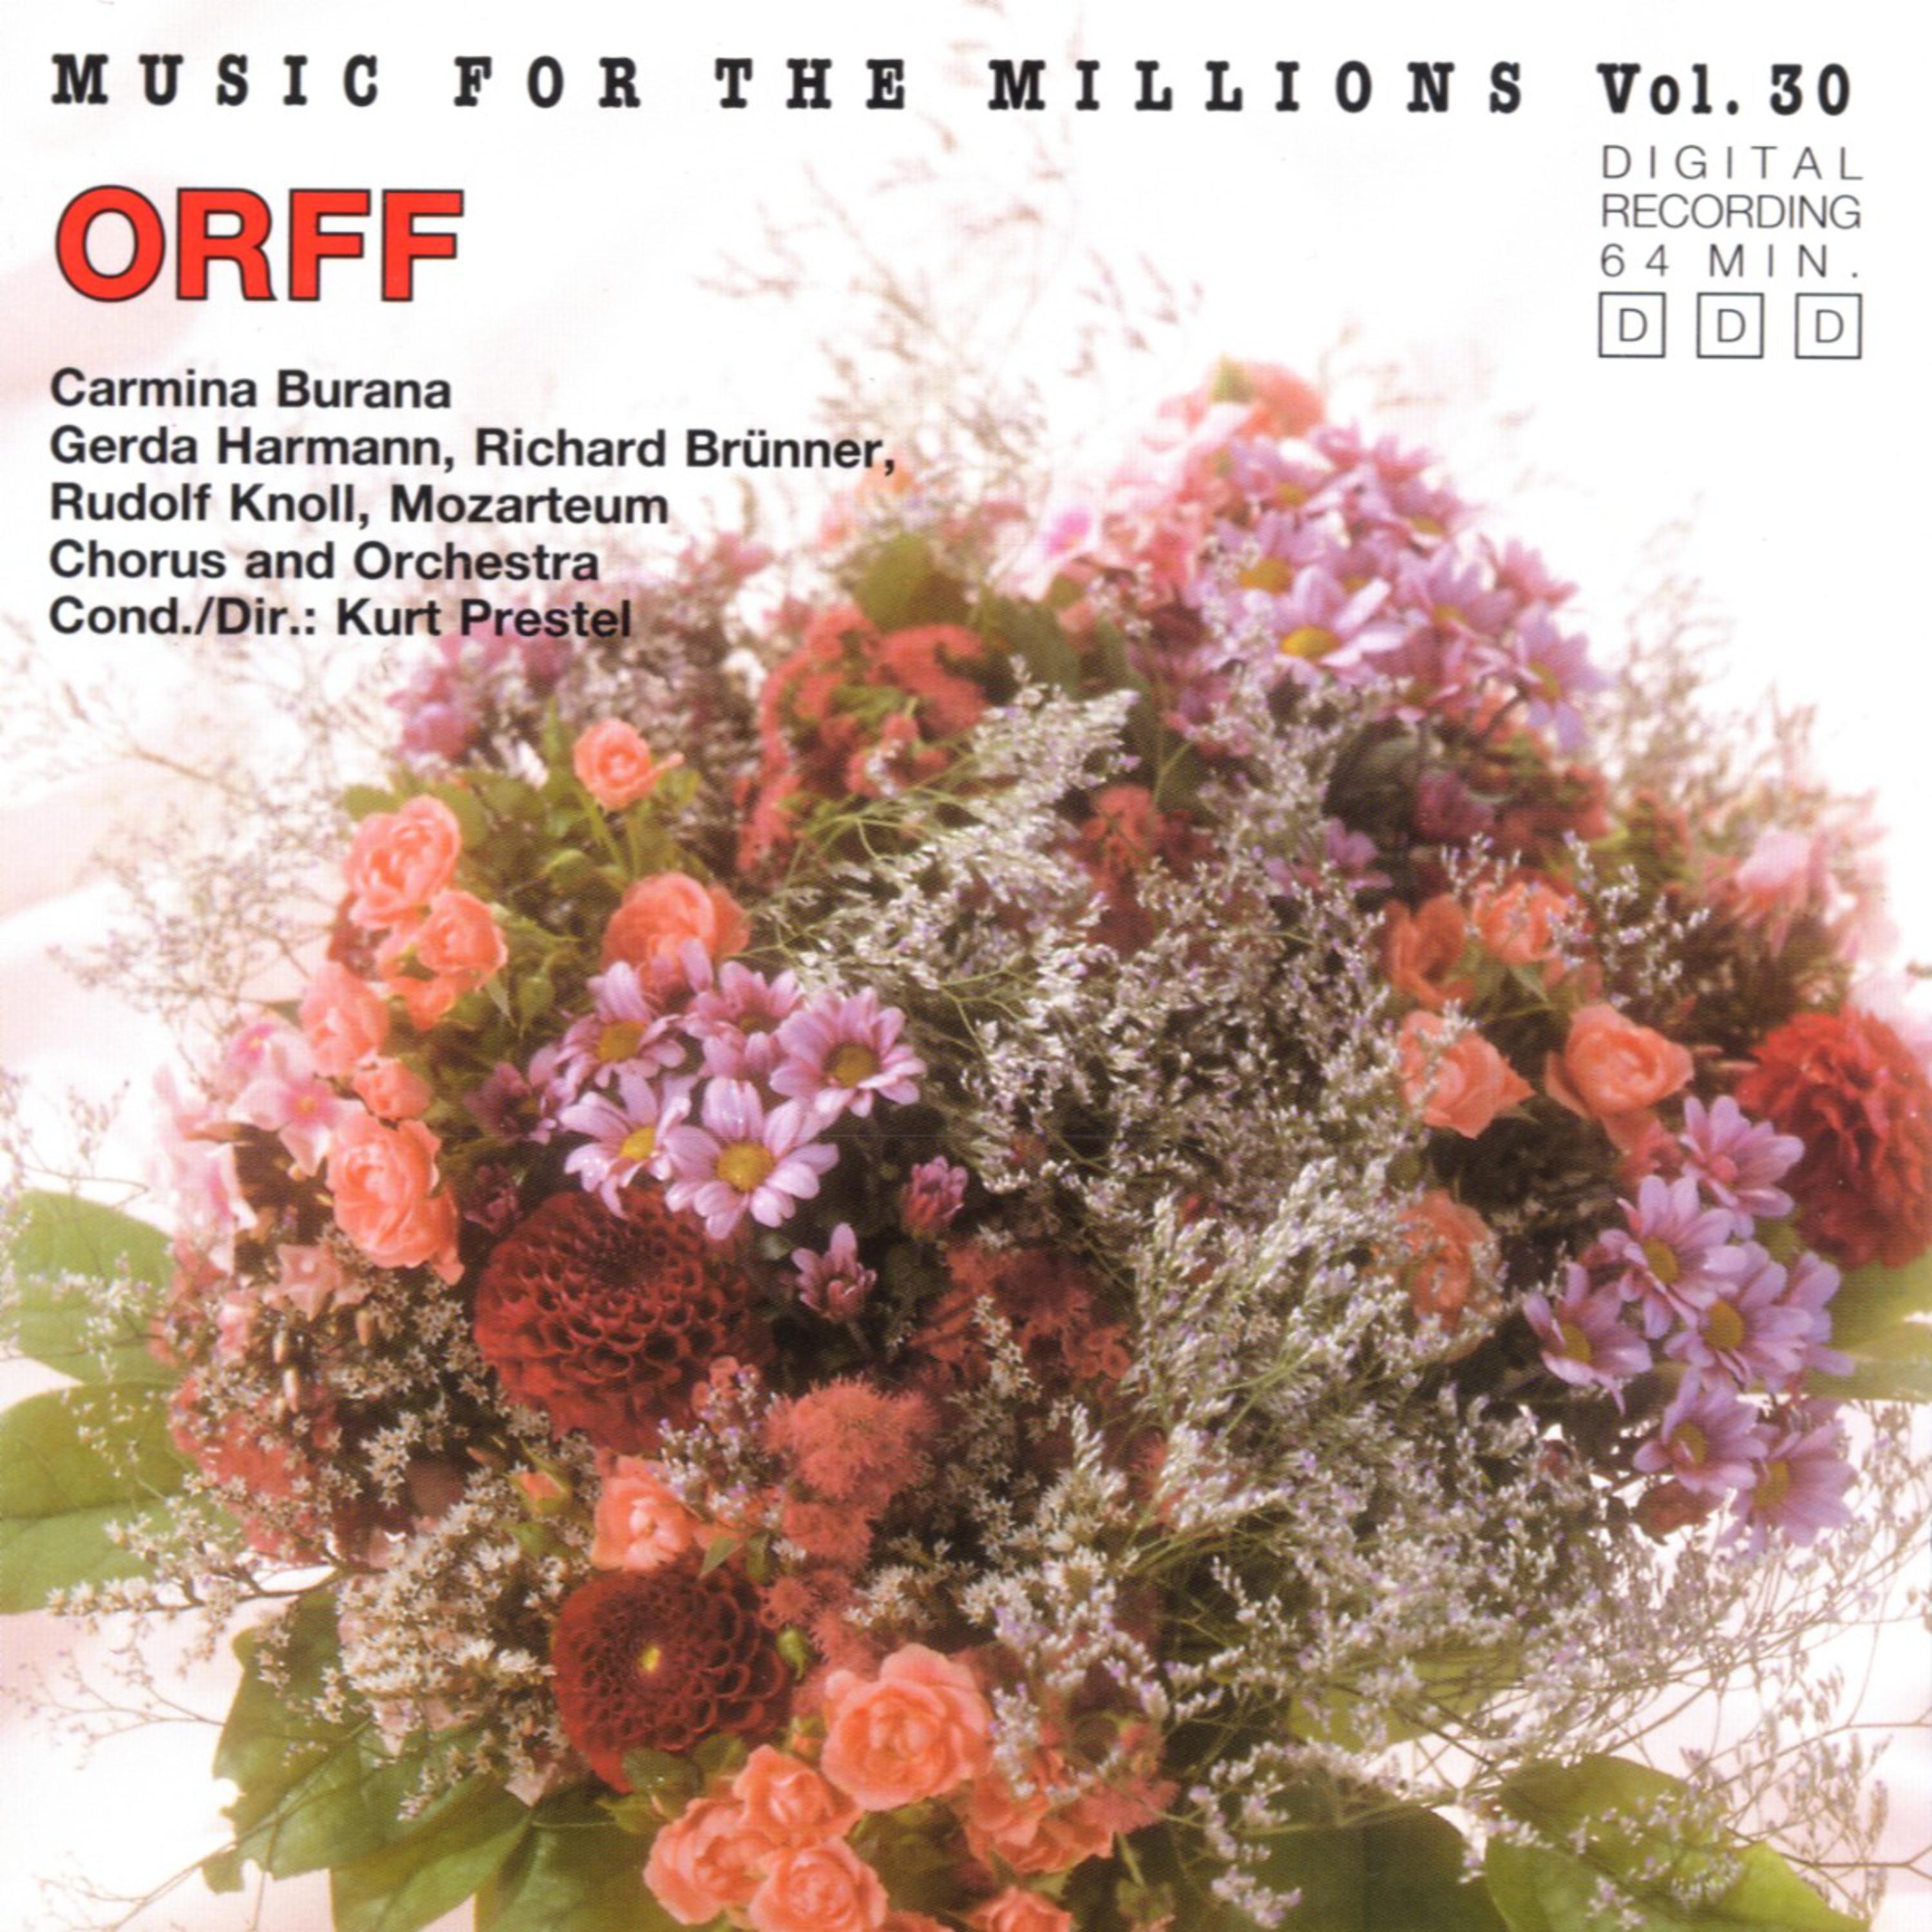 Music For The Millions Vol. 30 - Carl Orff: Carmina Burana